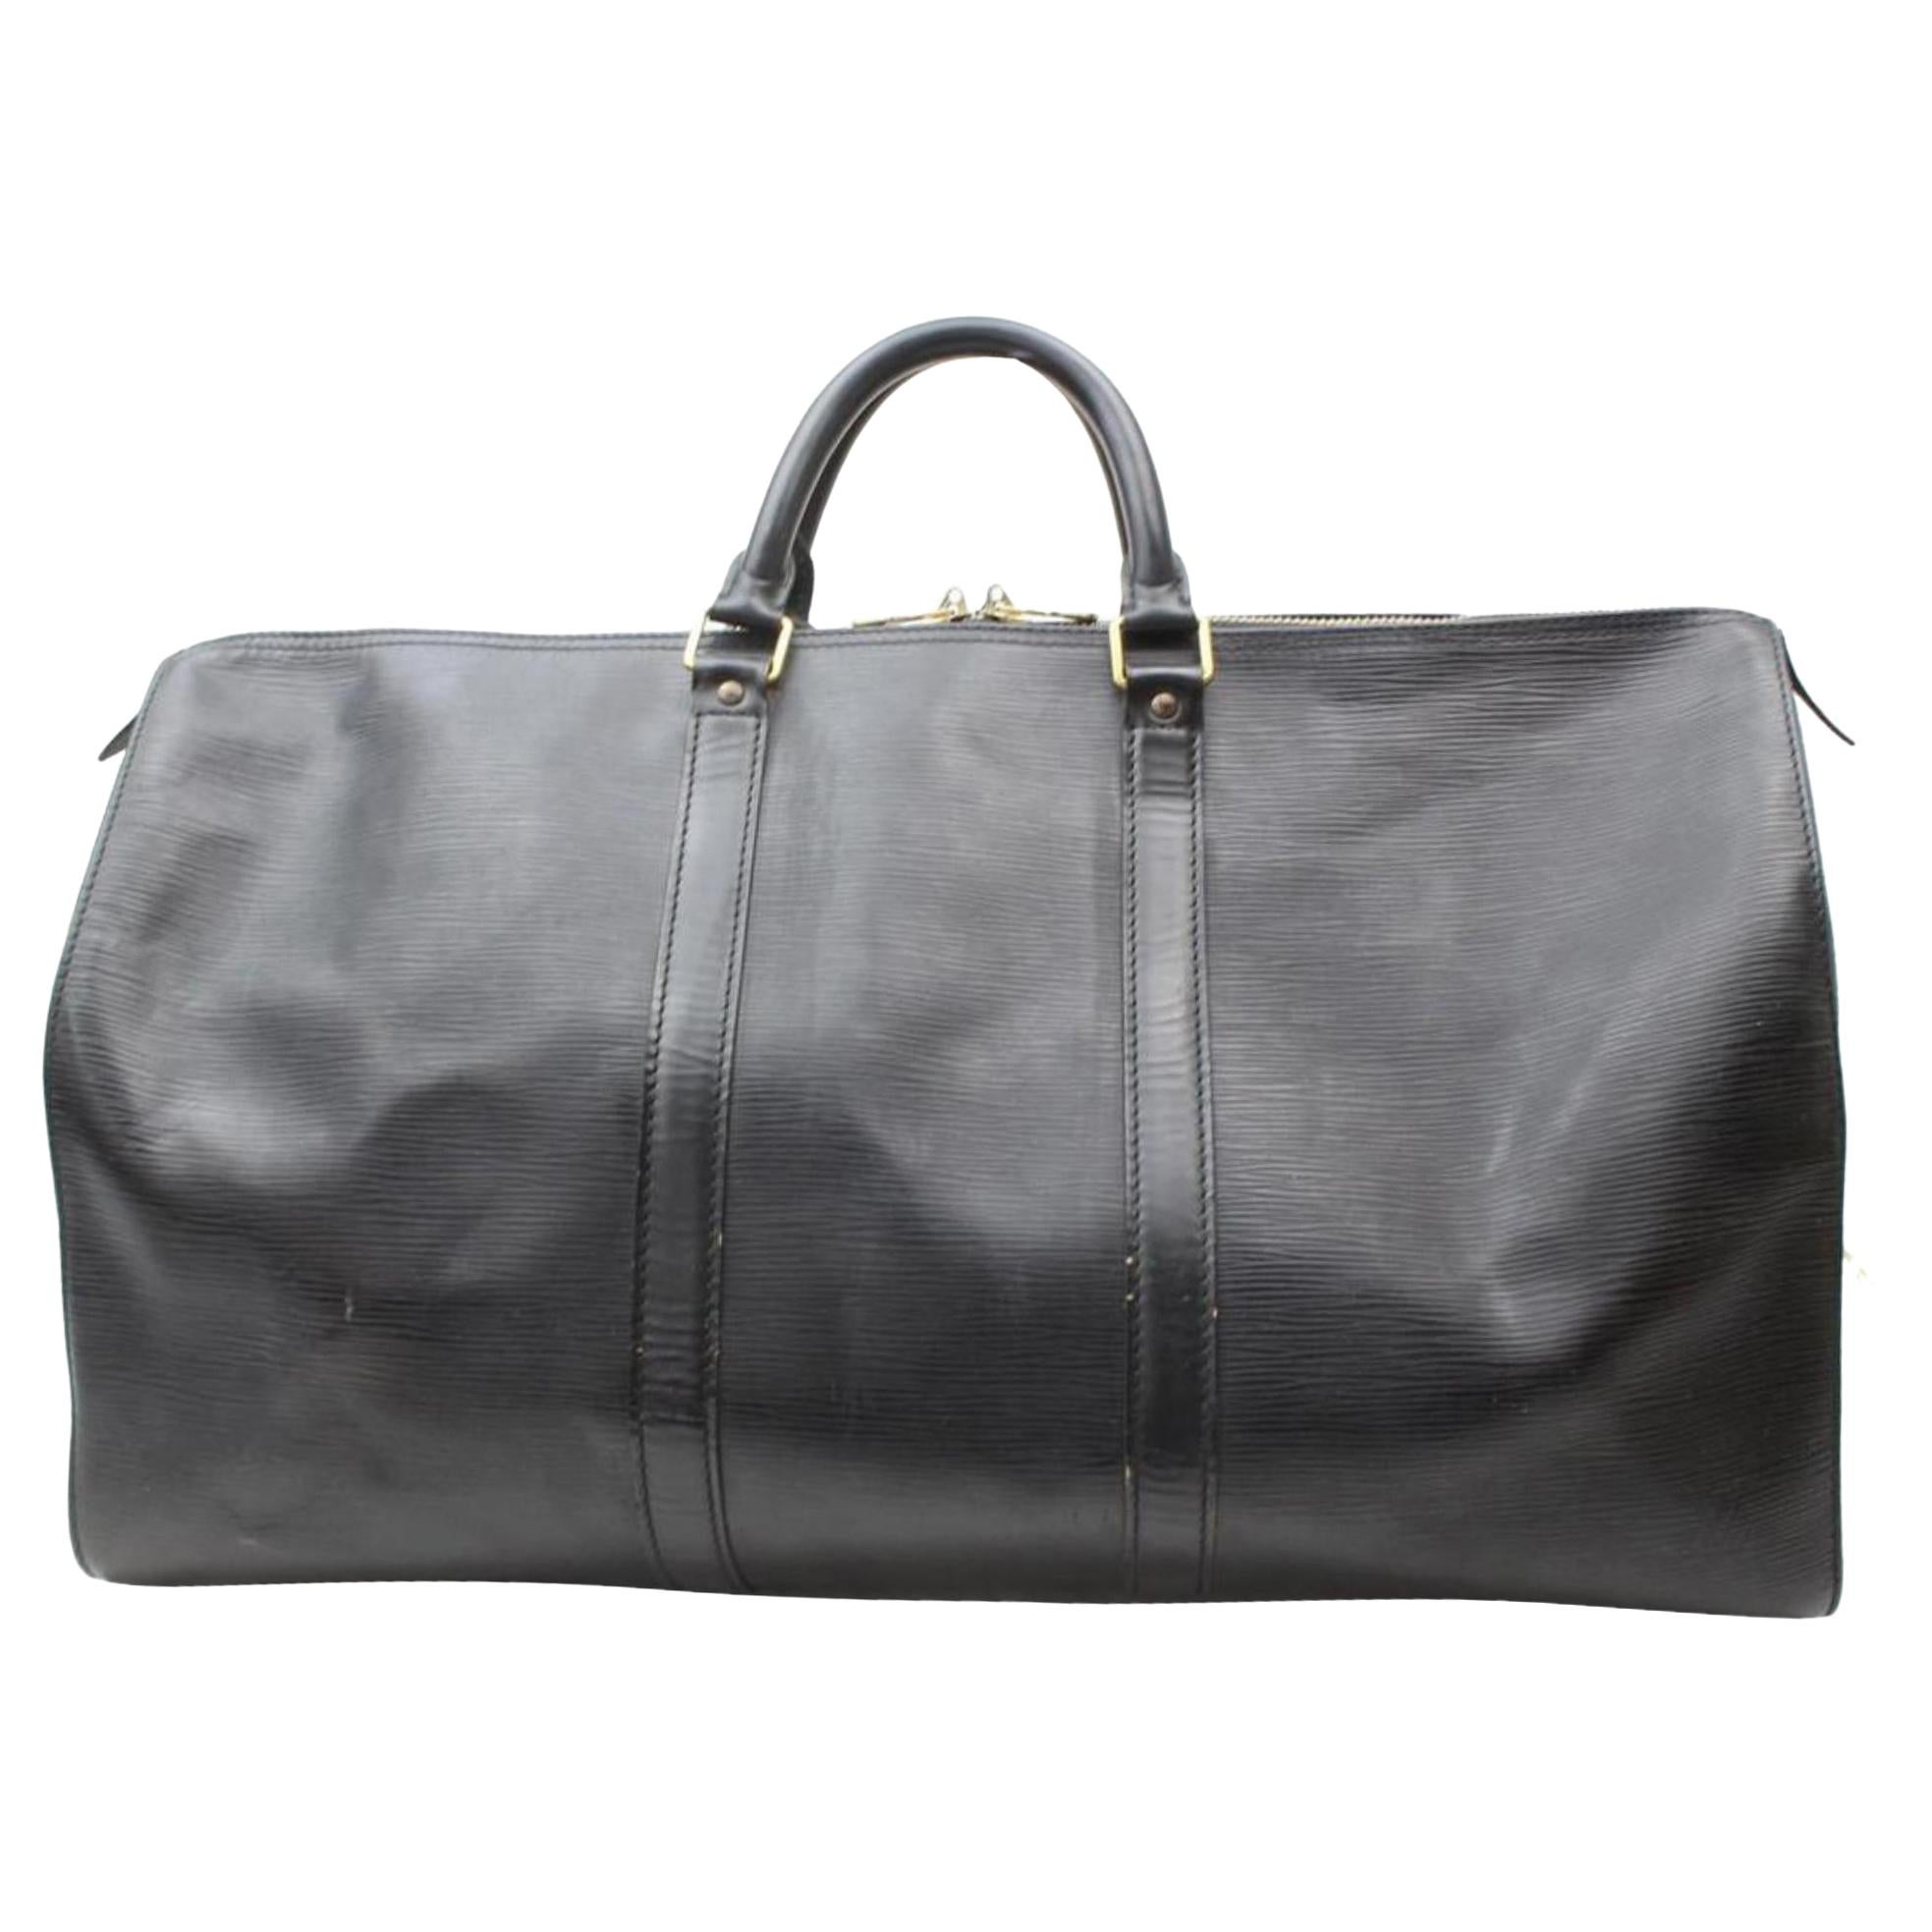 Louis Vuitton Keepall Duffle Noir 50 869589 Black Leather Weekend ...